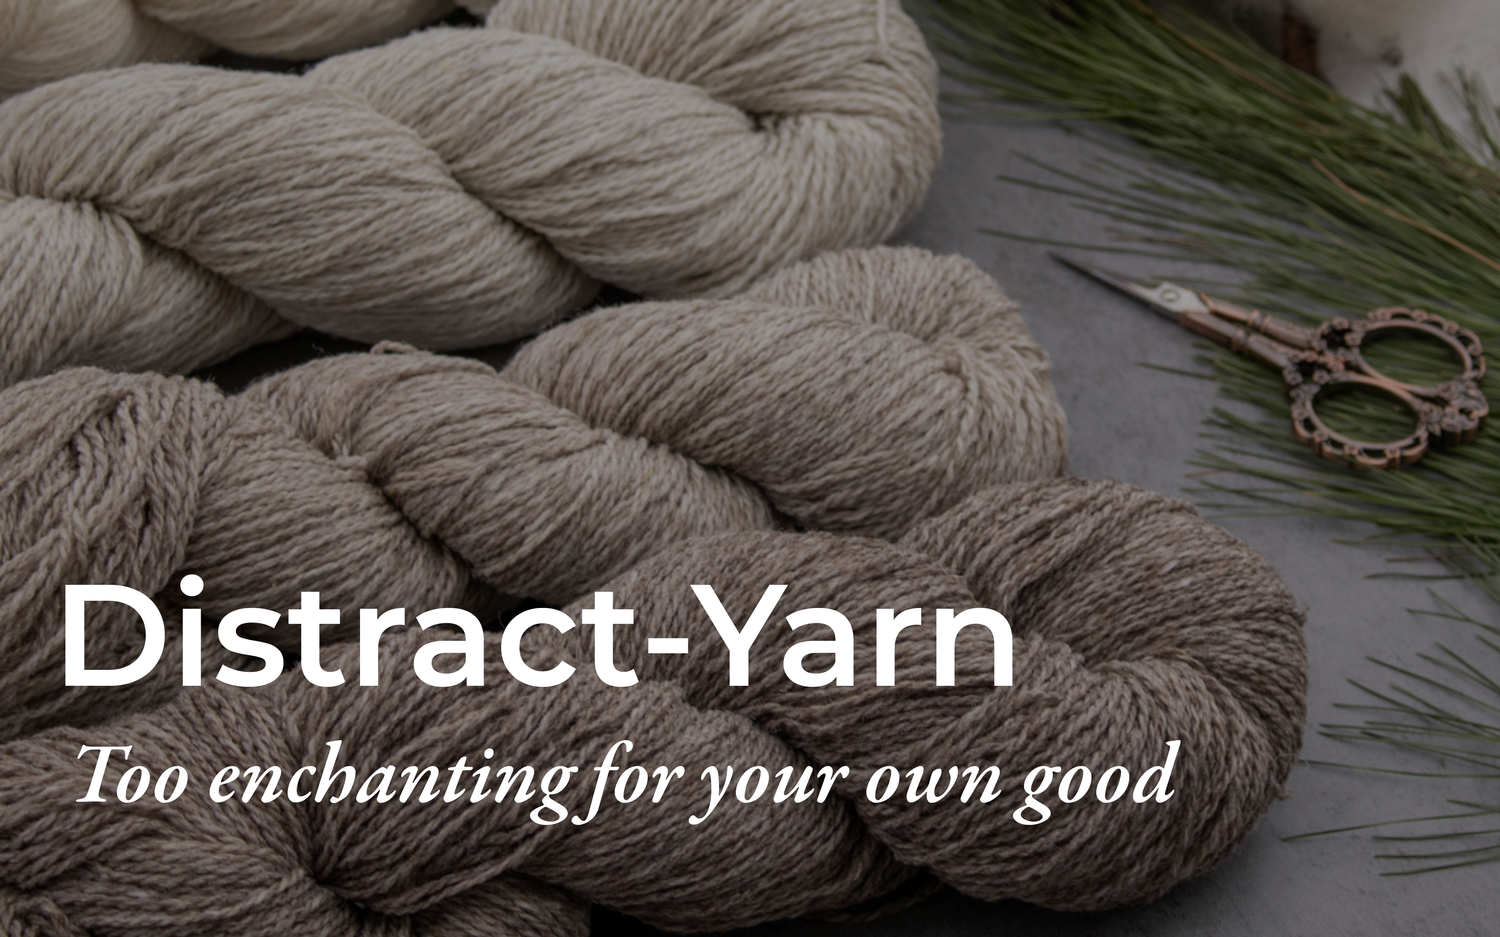 Distract-Yarn